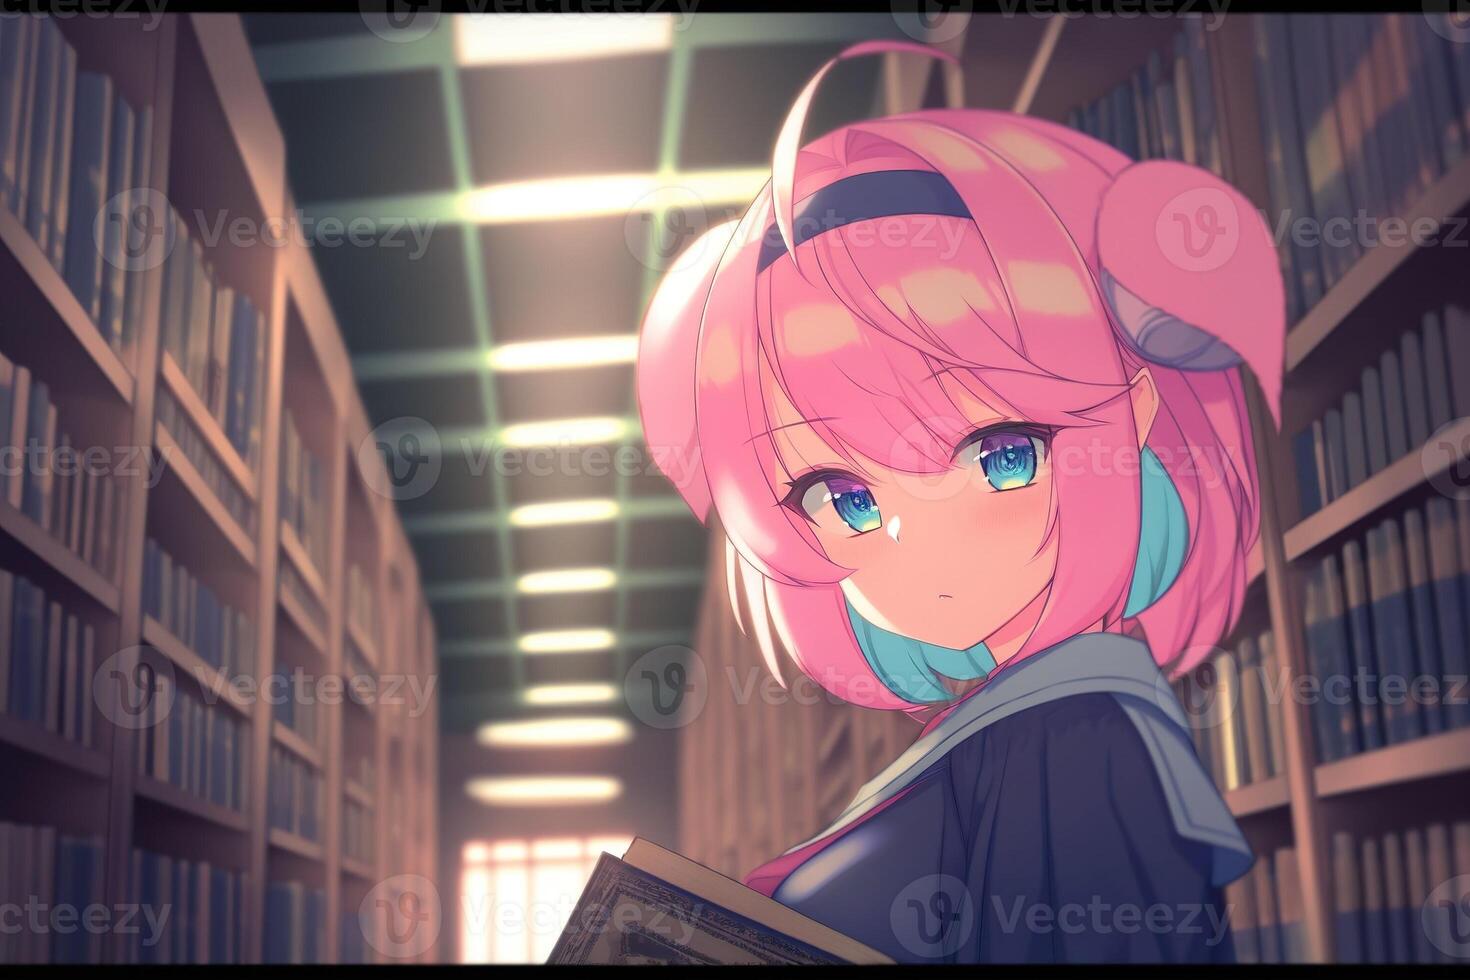 cute pinkish hair anime schoolgirl in library, photo